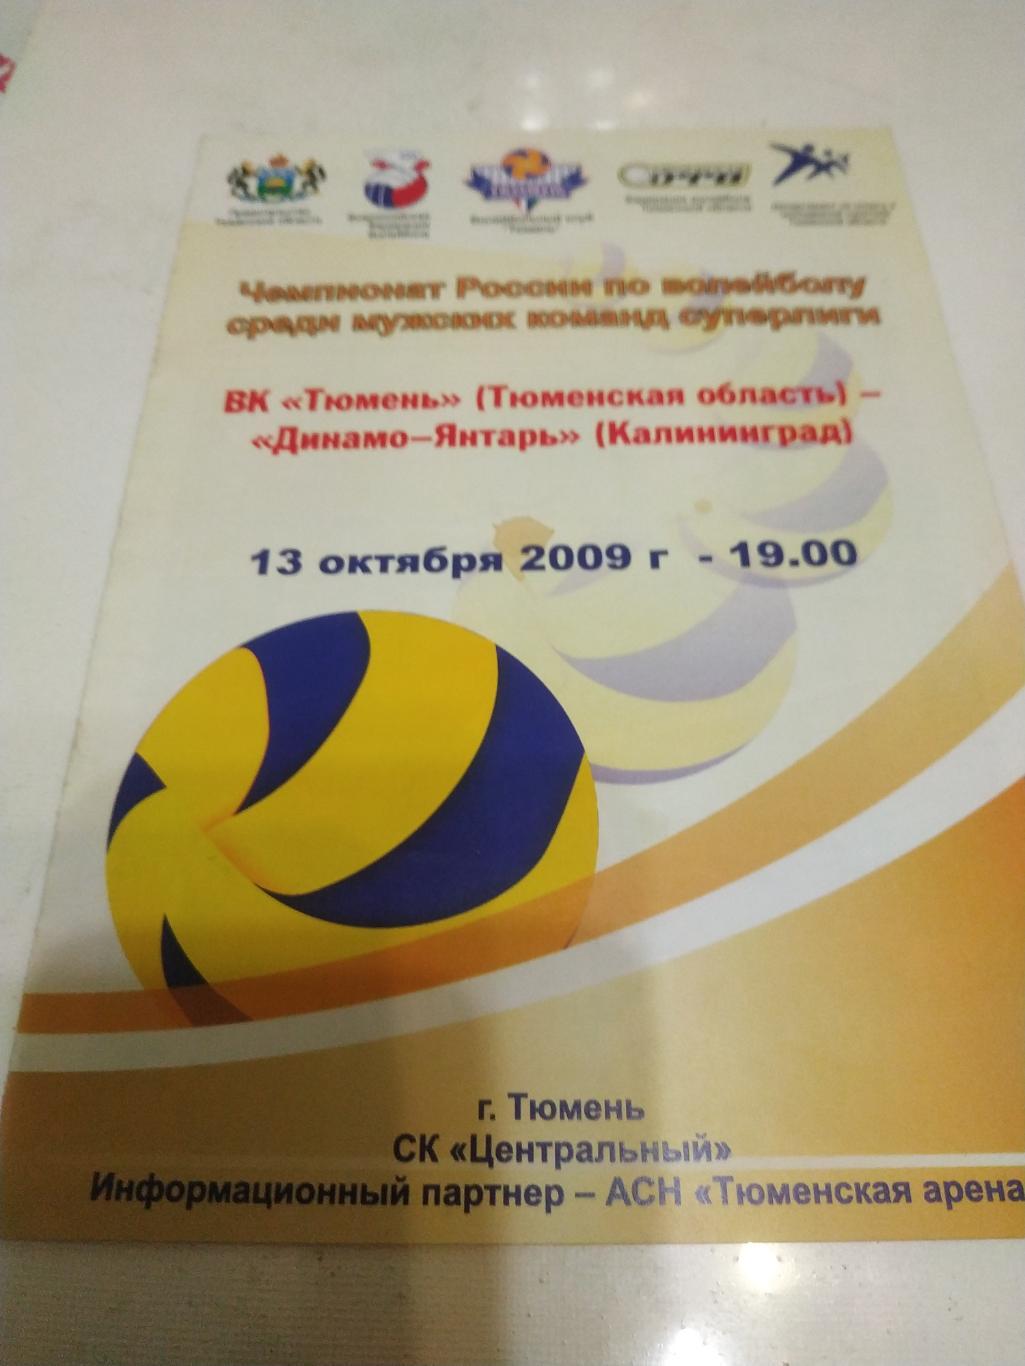 ВК Тюмень - Динамо - Янтарь (Калининград) 13.10.2009.